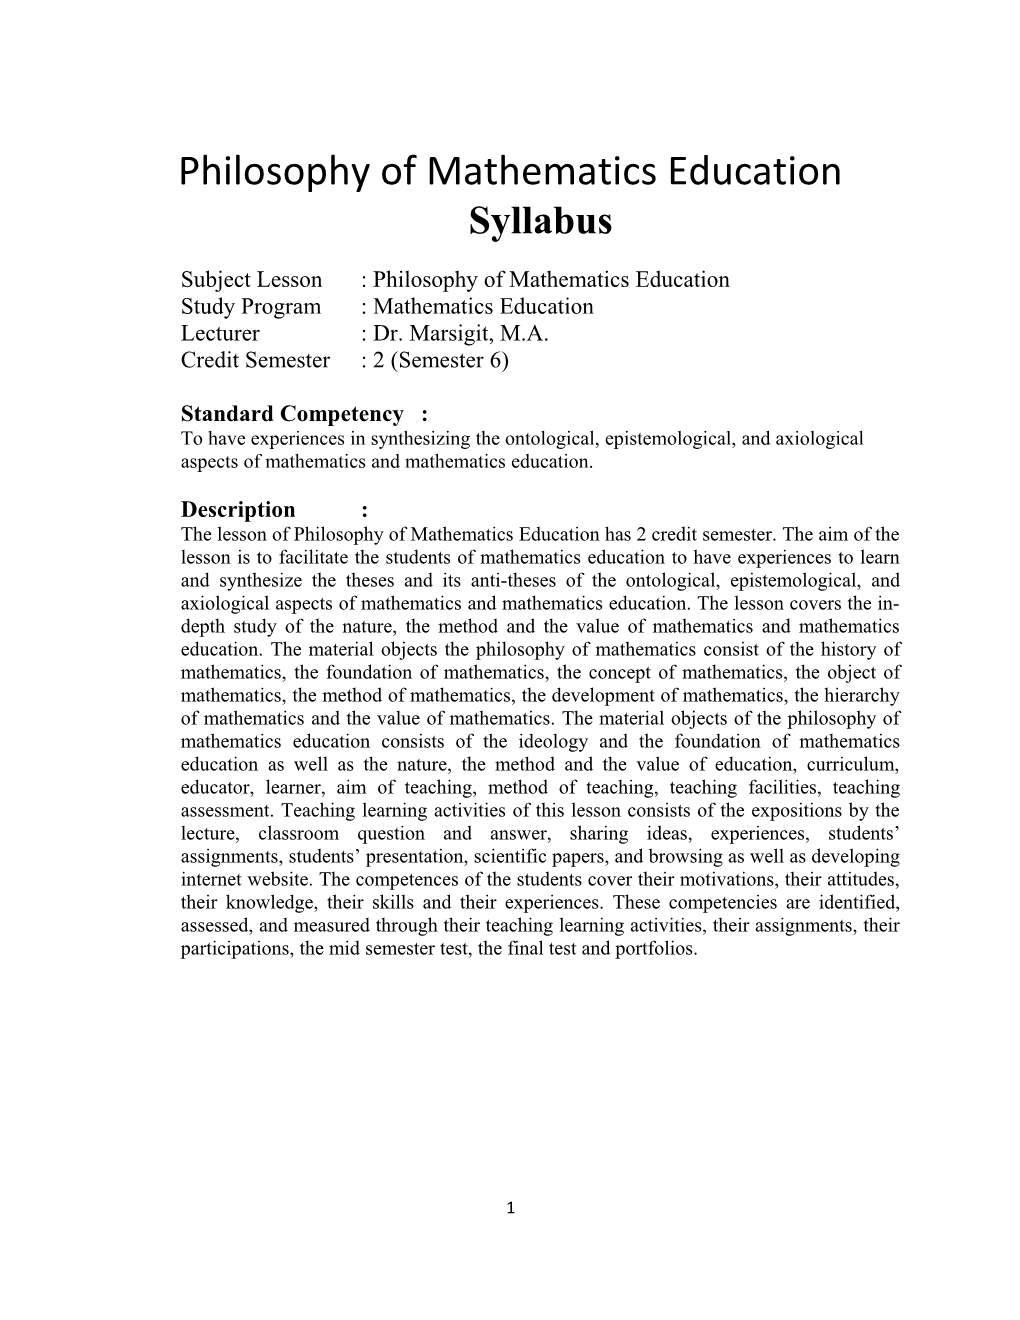 Subject Lesson: Philosophy of Mathematics Education